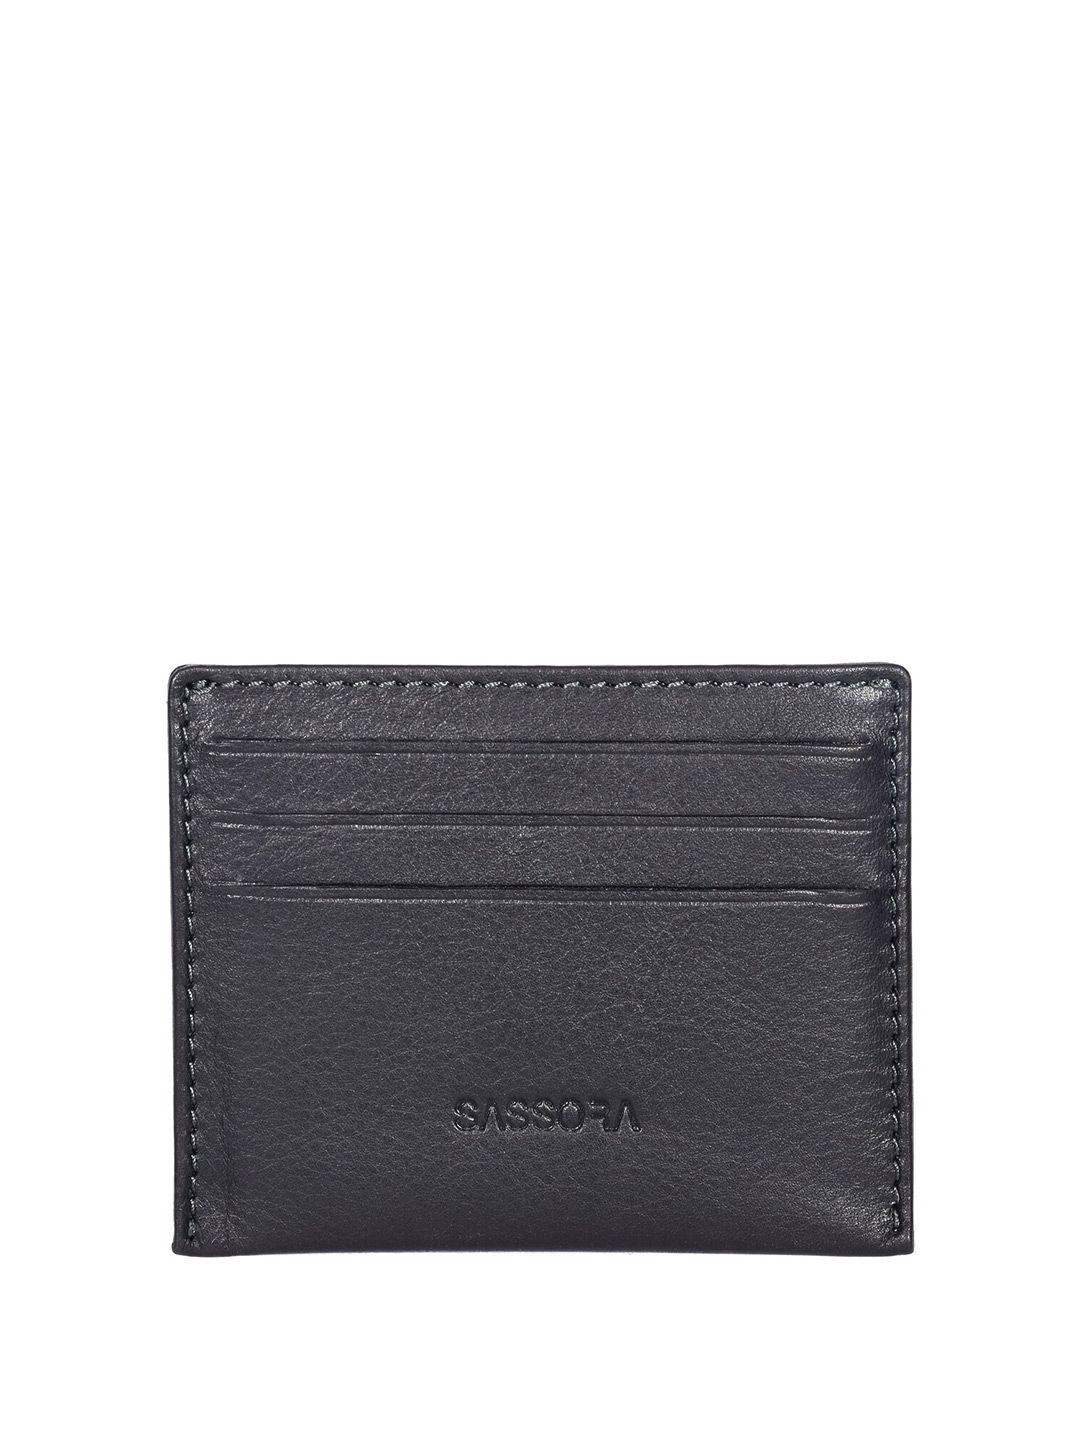 sassora unisex black textured leather card holder